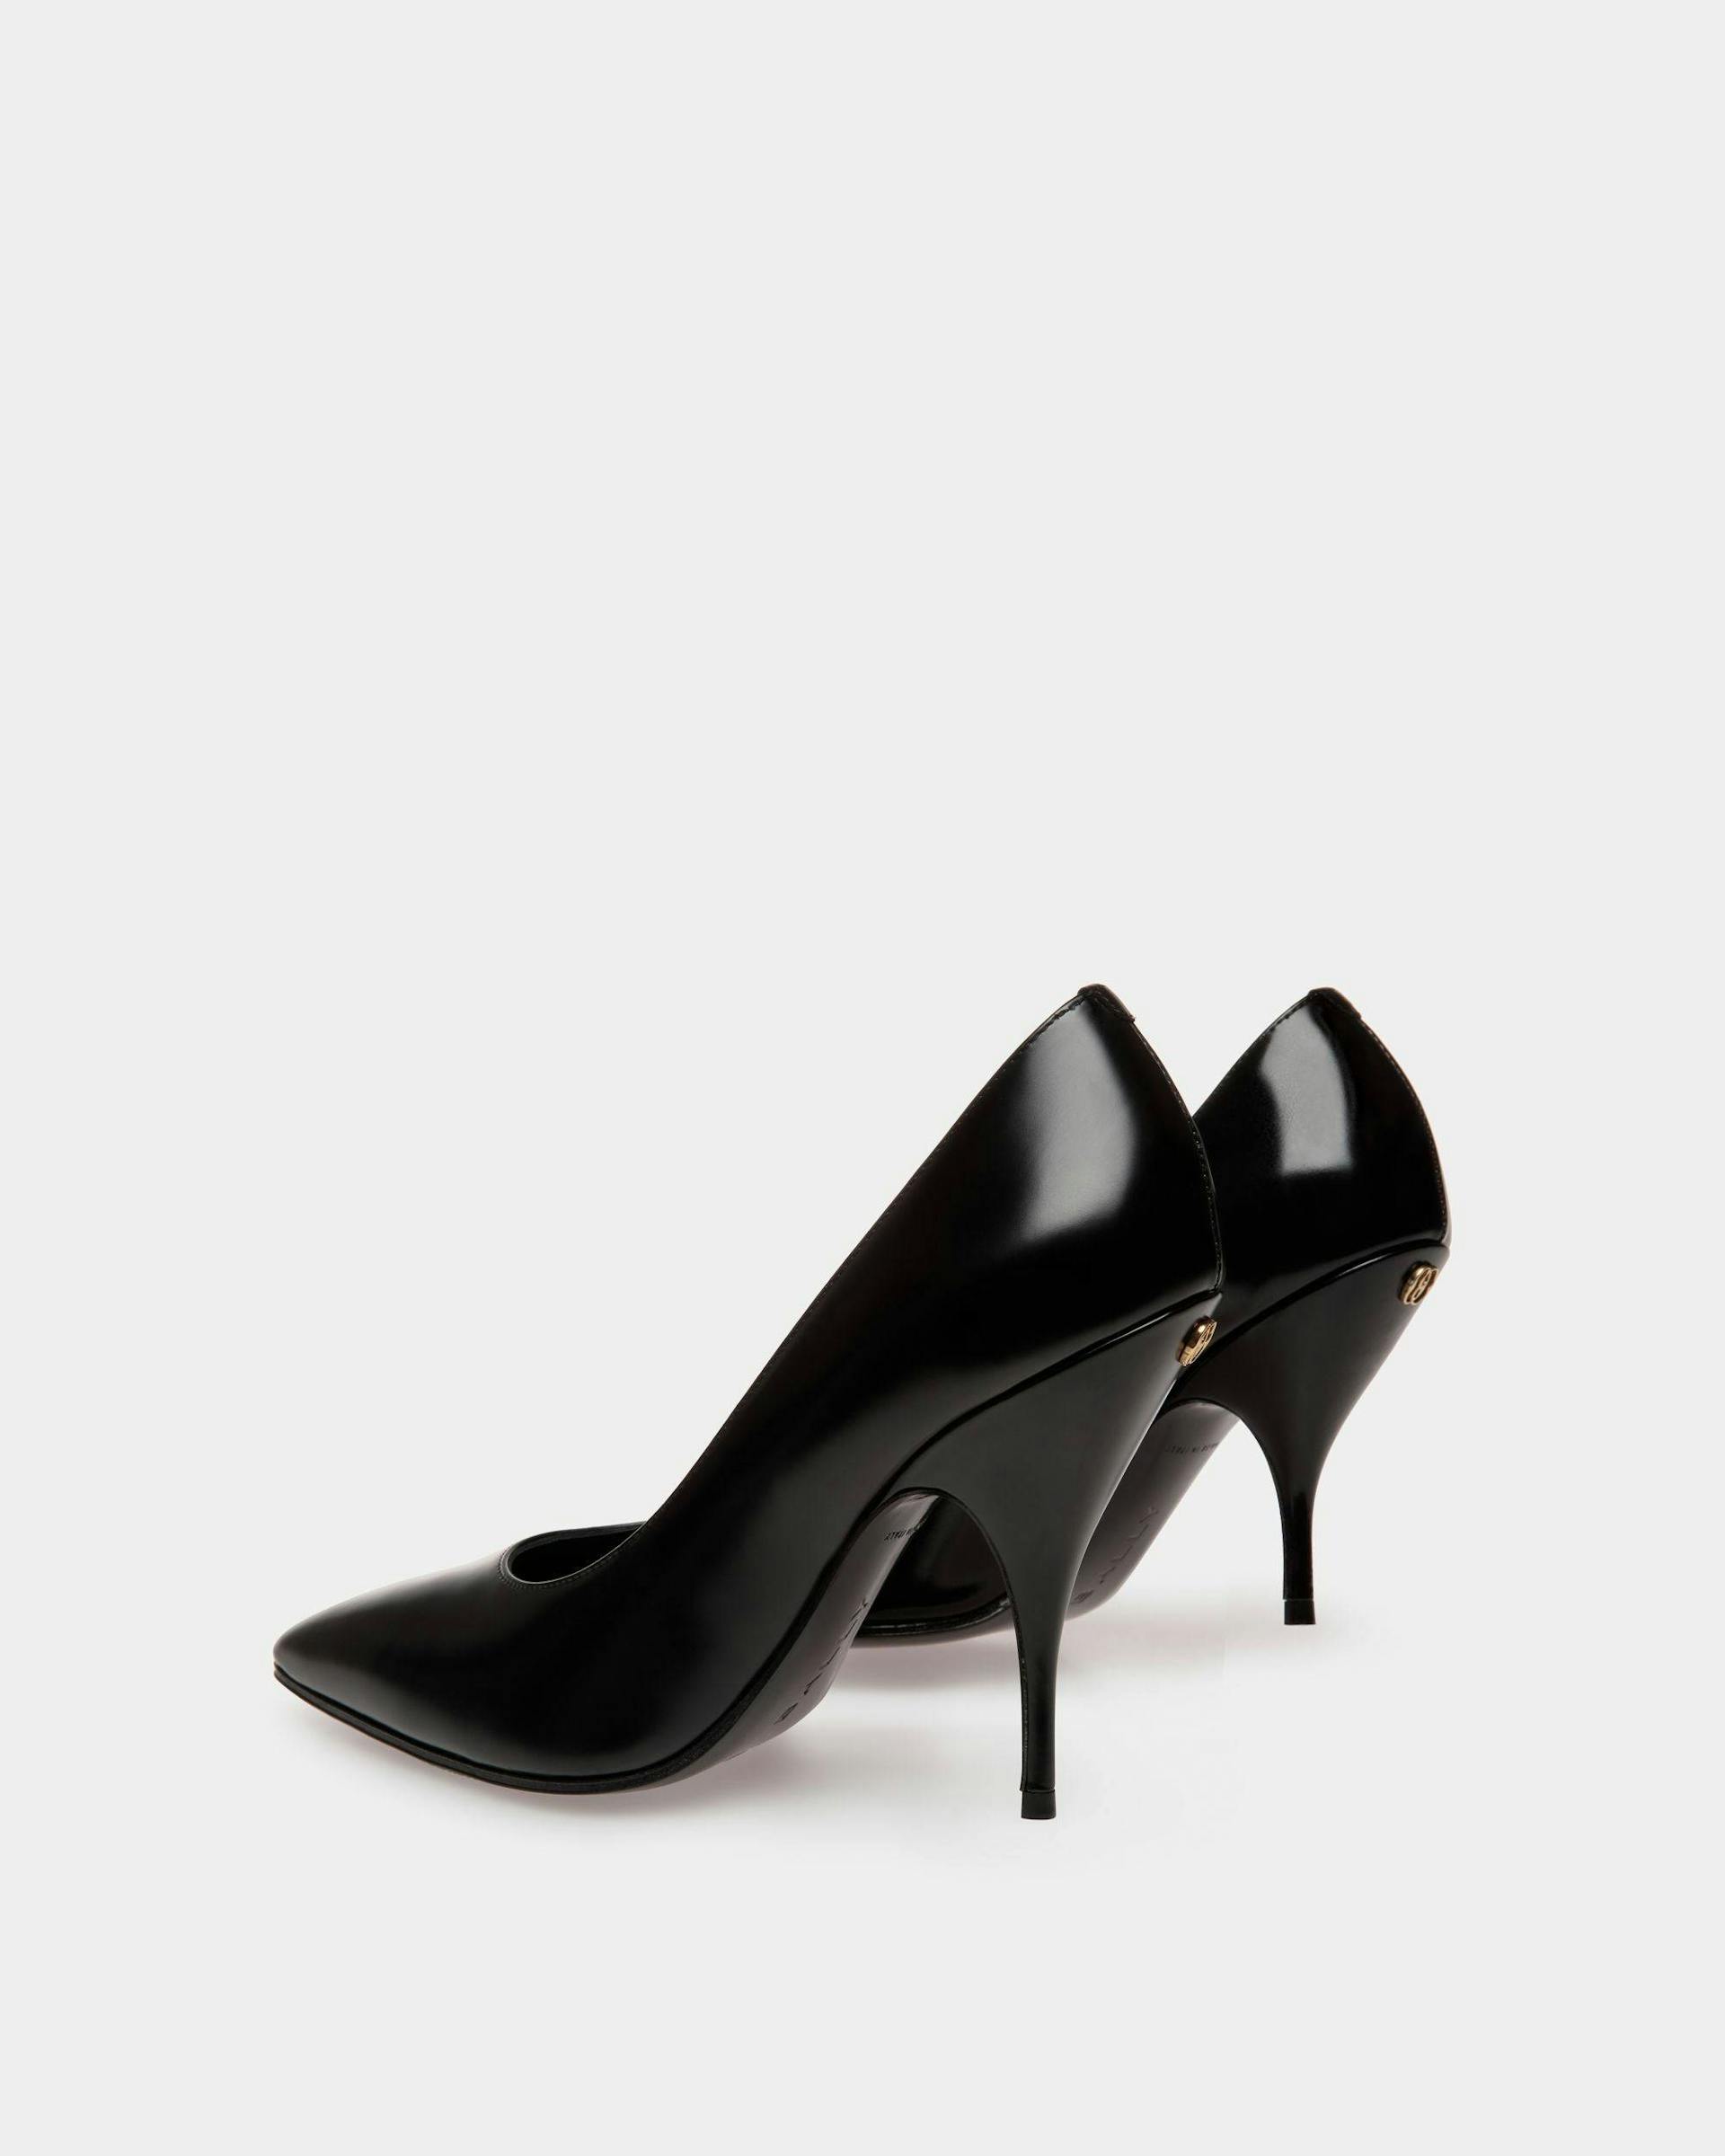 Claudelle Pumps In Black Leather - Women's - Bally - 03